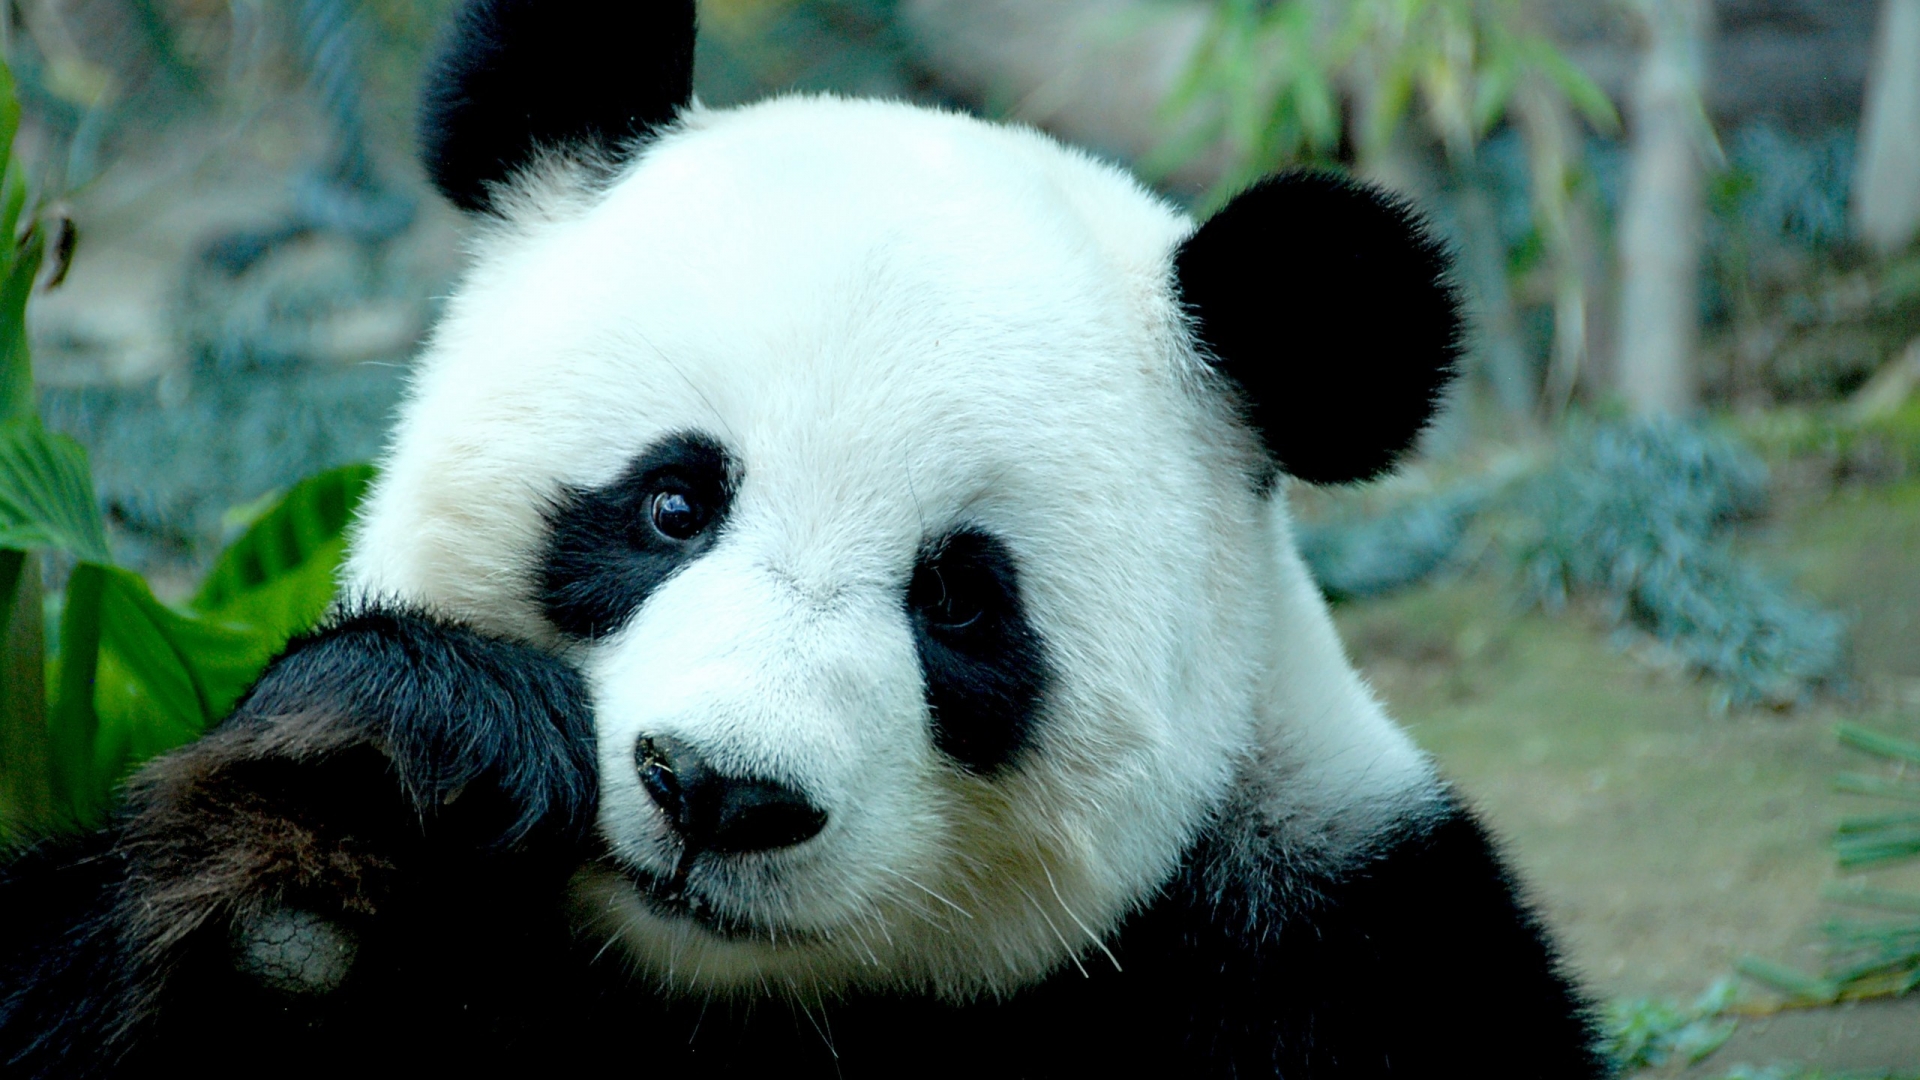 Sad Panda Bear for 1920 x 1080 HDTV 1080p resolution